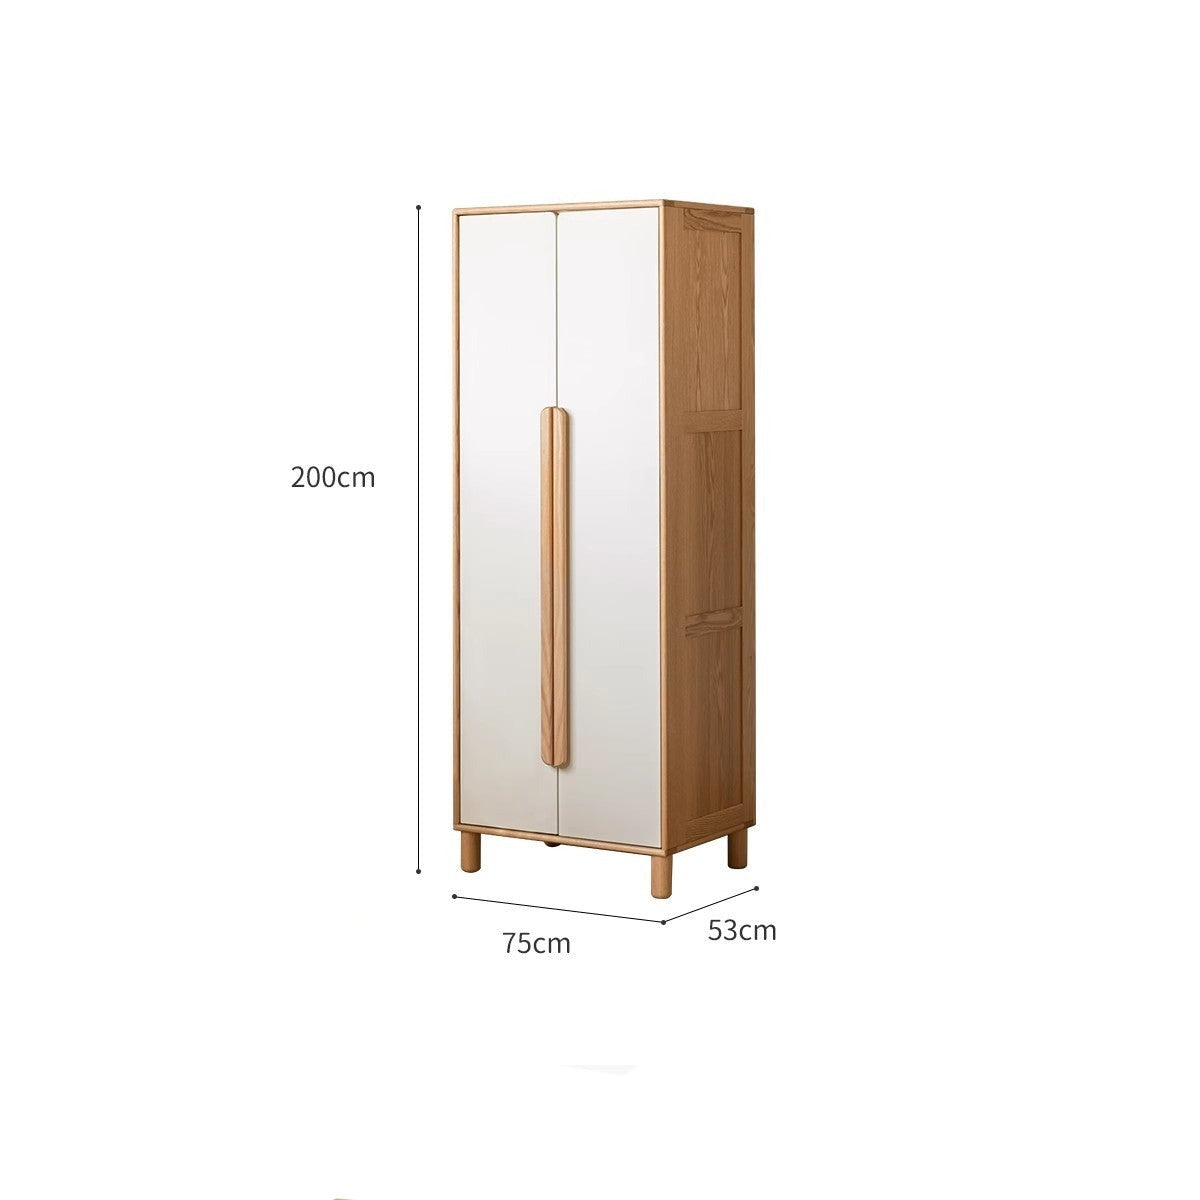 Oak solid wood children's wardrobe combination storage cabinet"